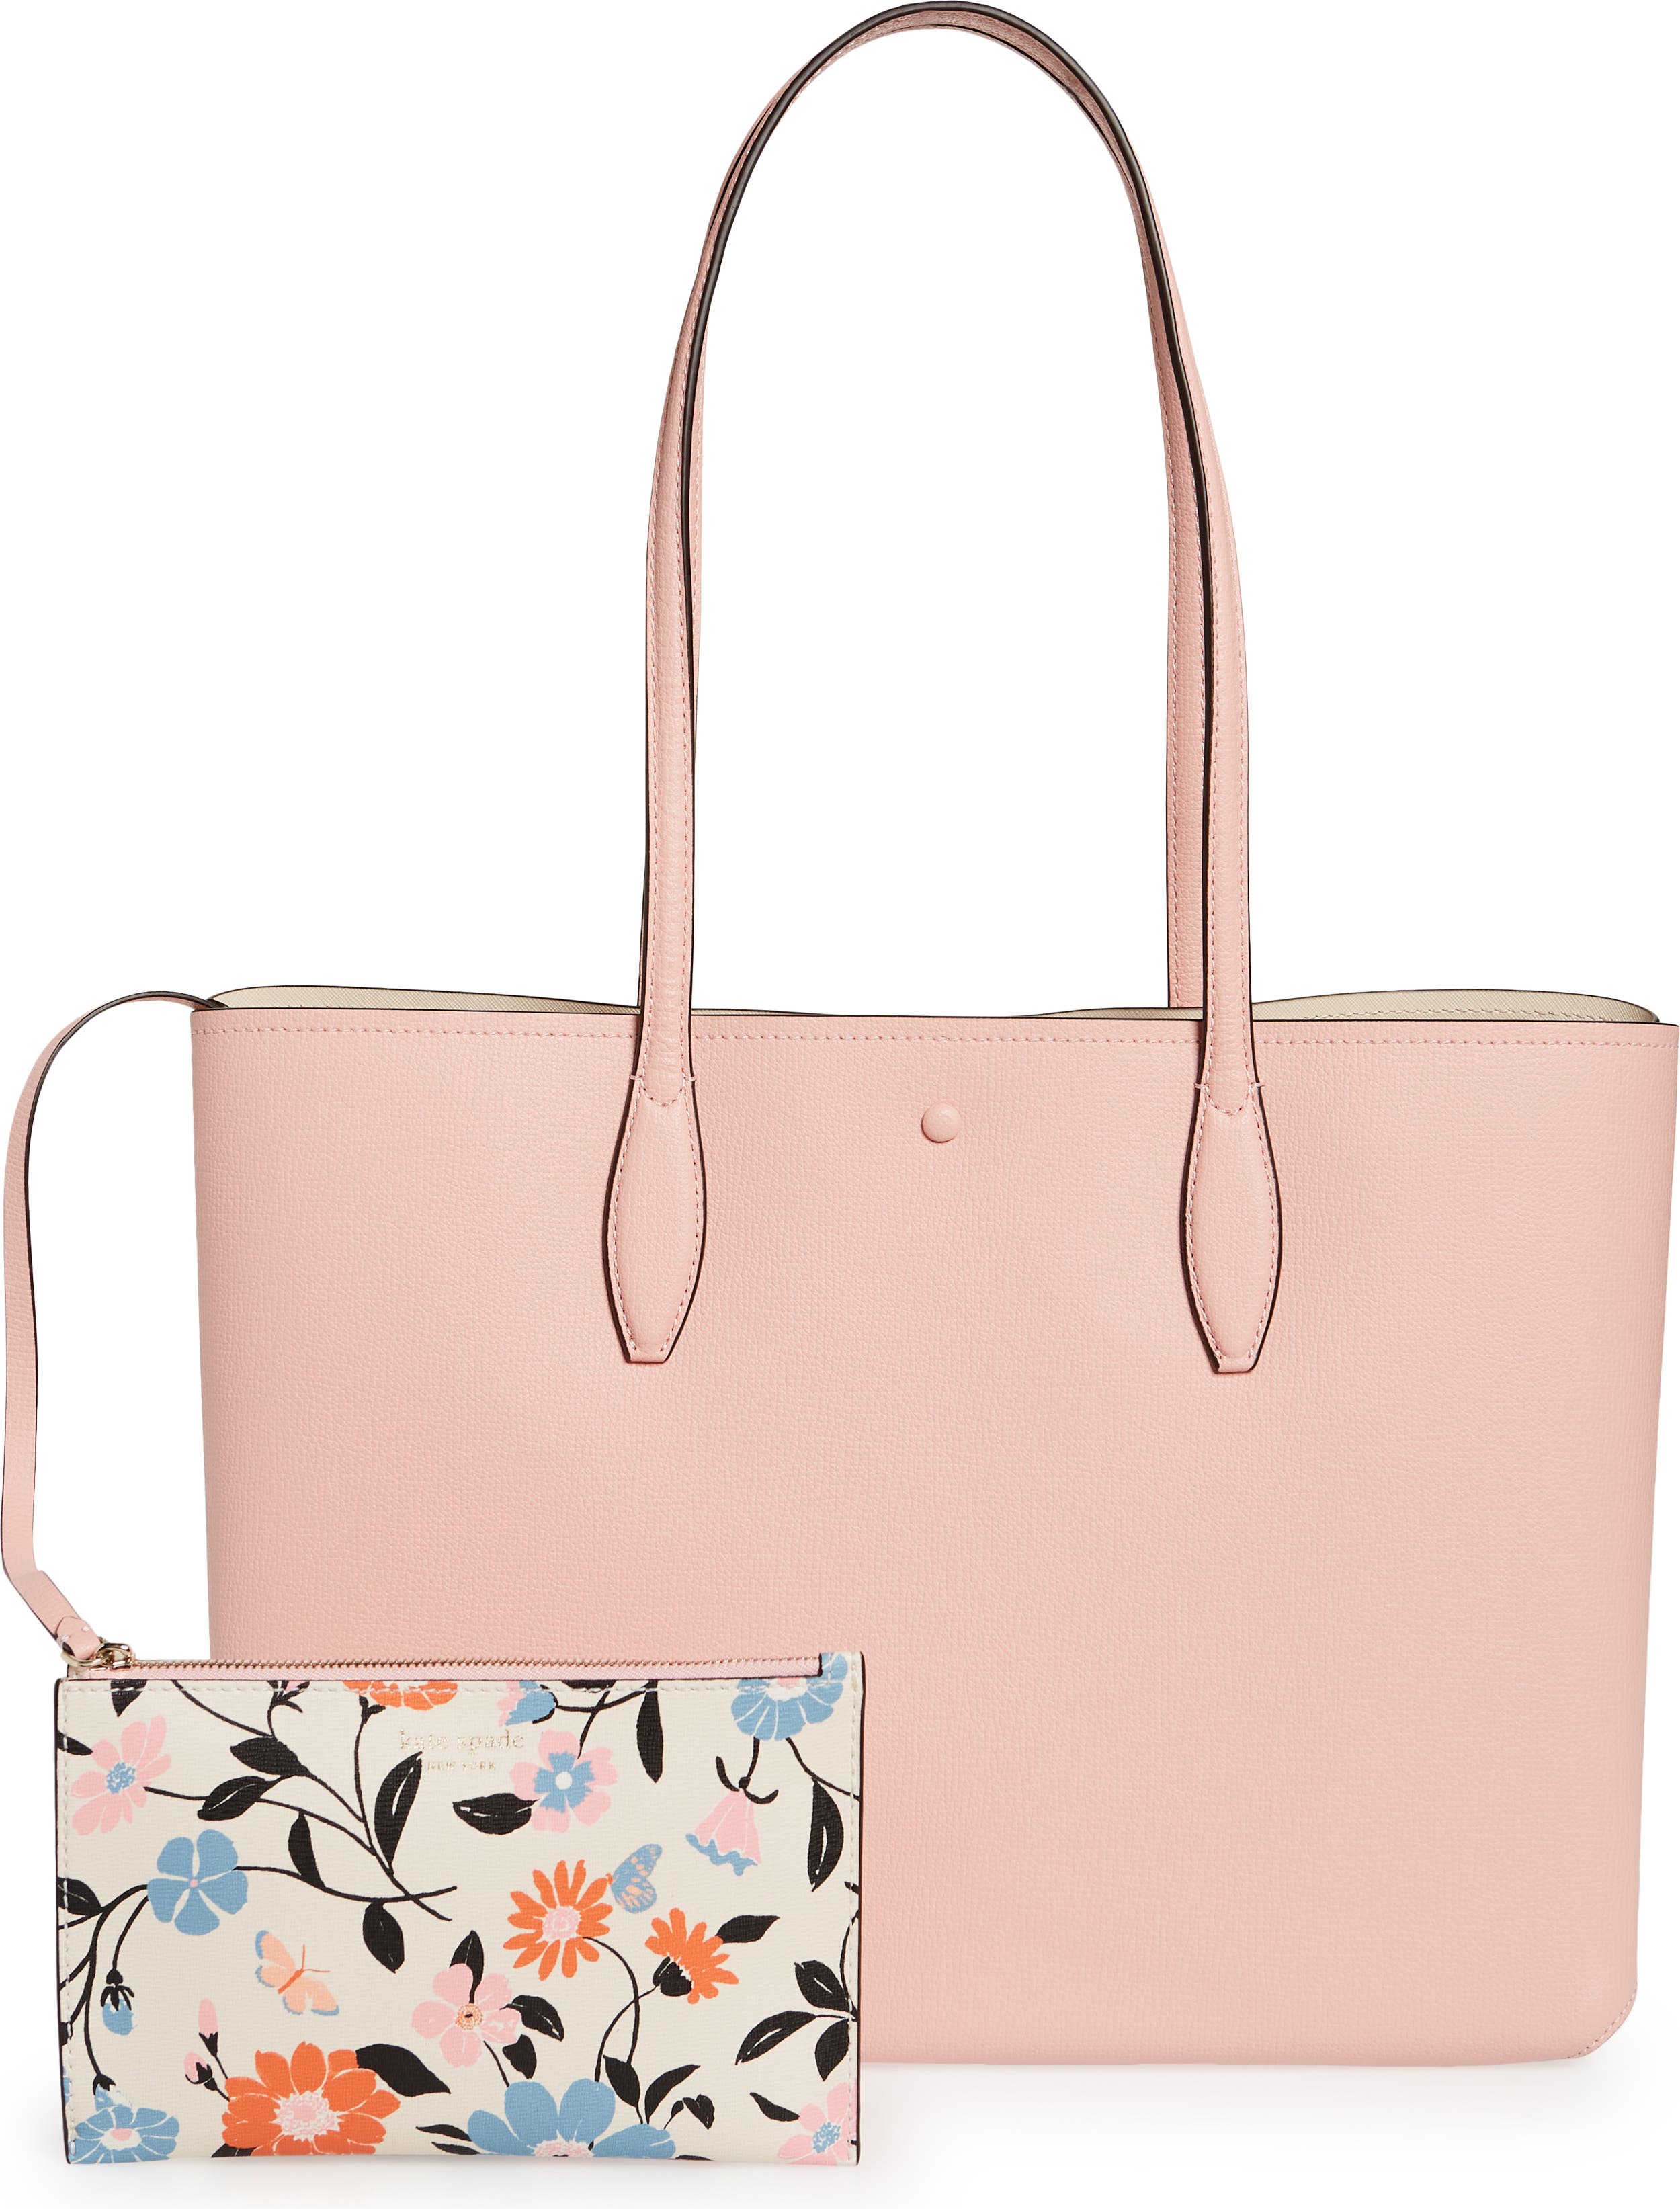 kate spade new york pink purse Off 40% - SHREESAINATHMETALIND.COM